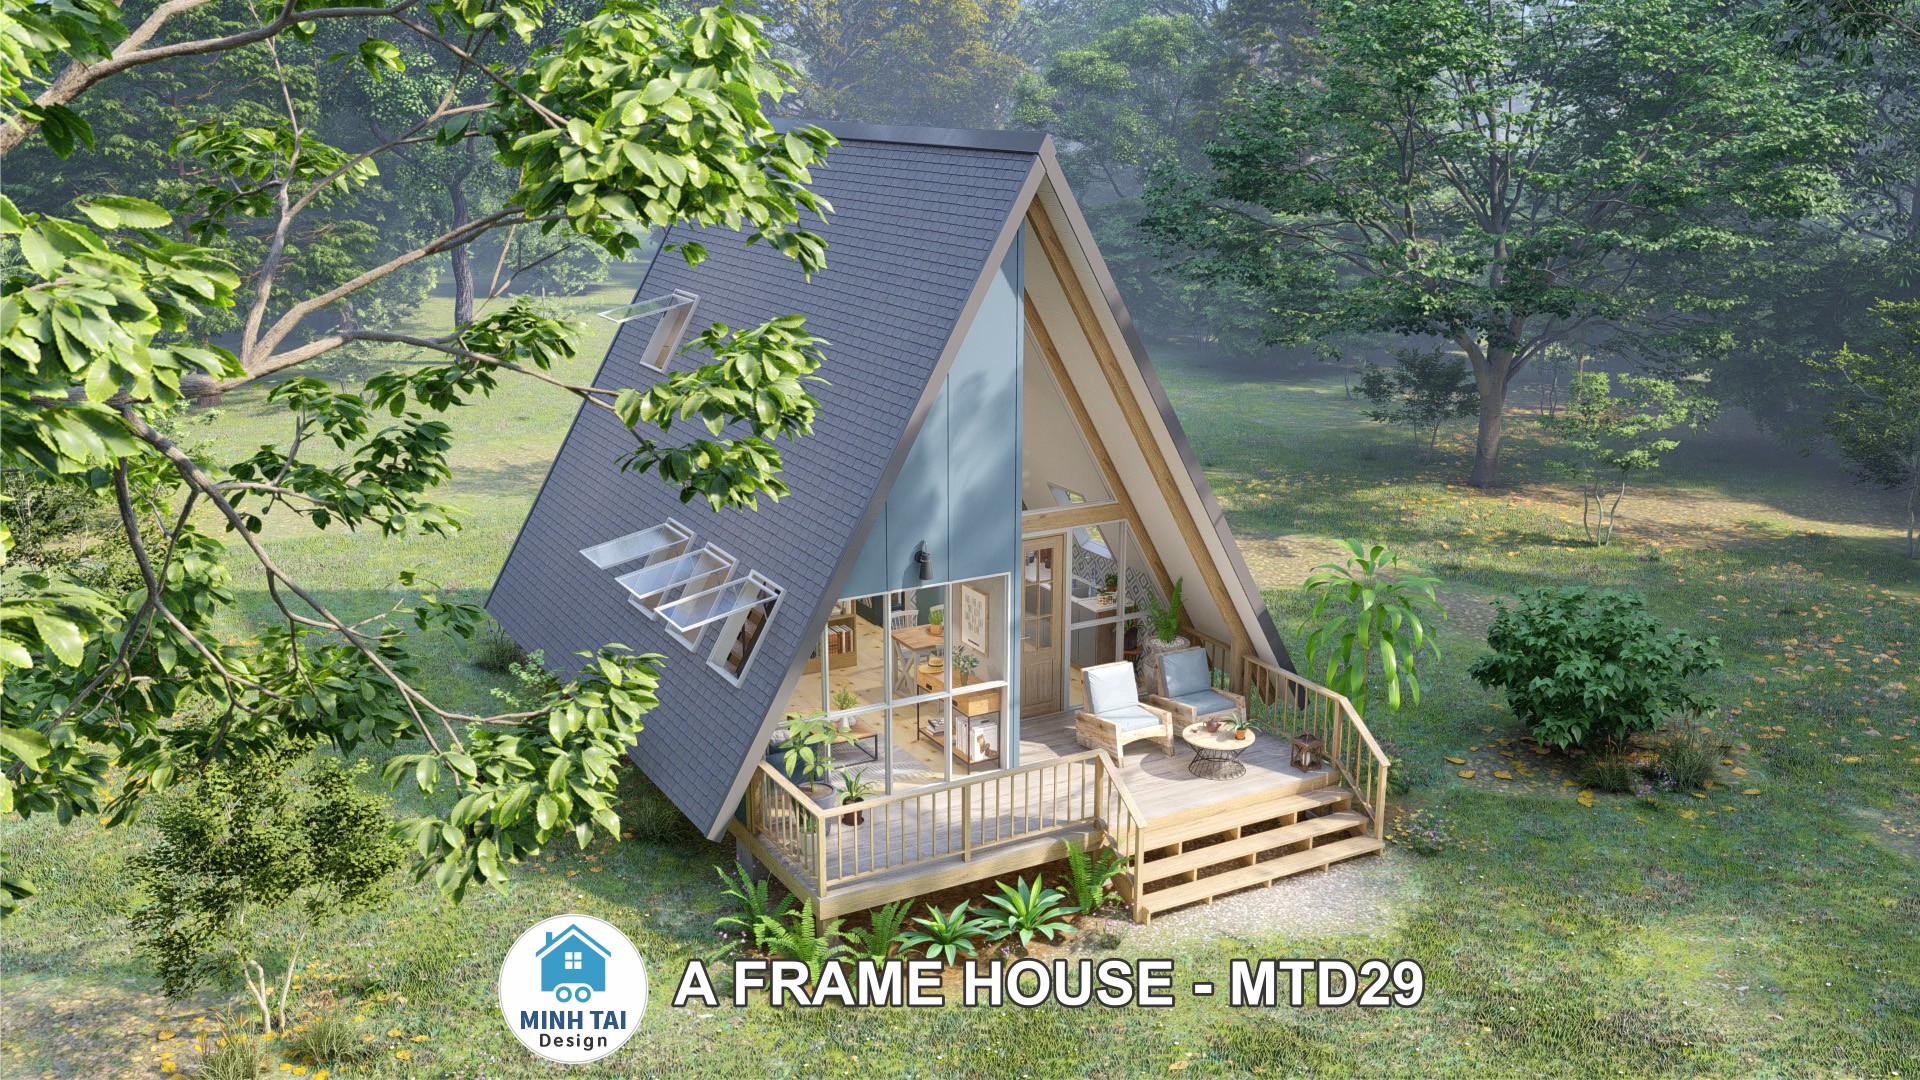 A Frame House Plan Design - Mtd29 - Minh Tai Design